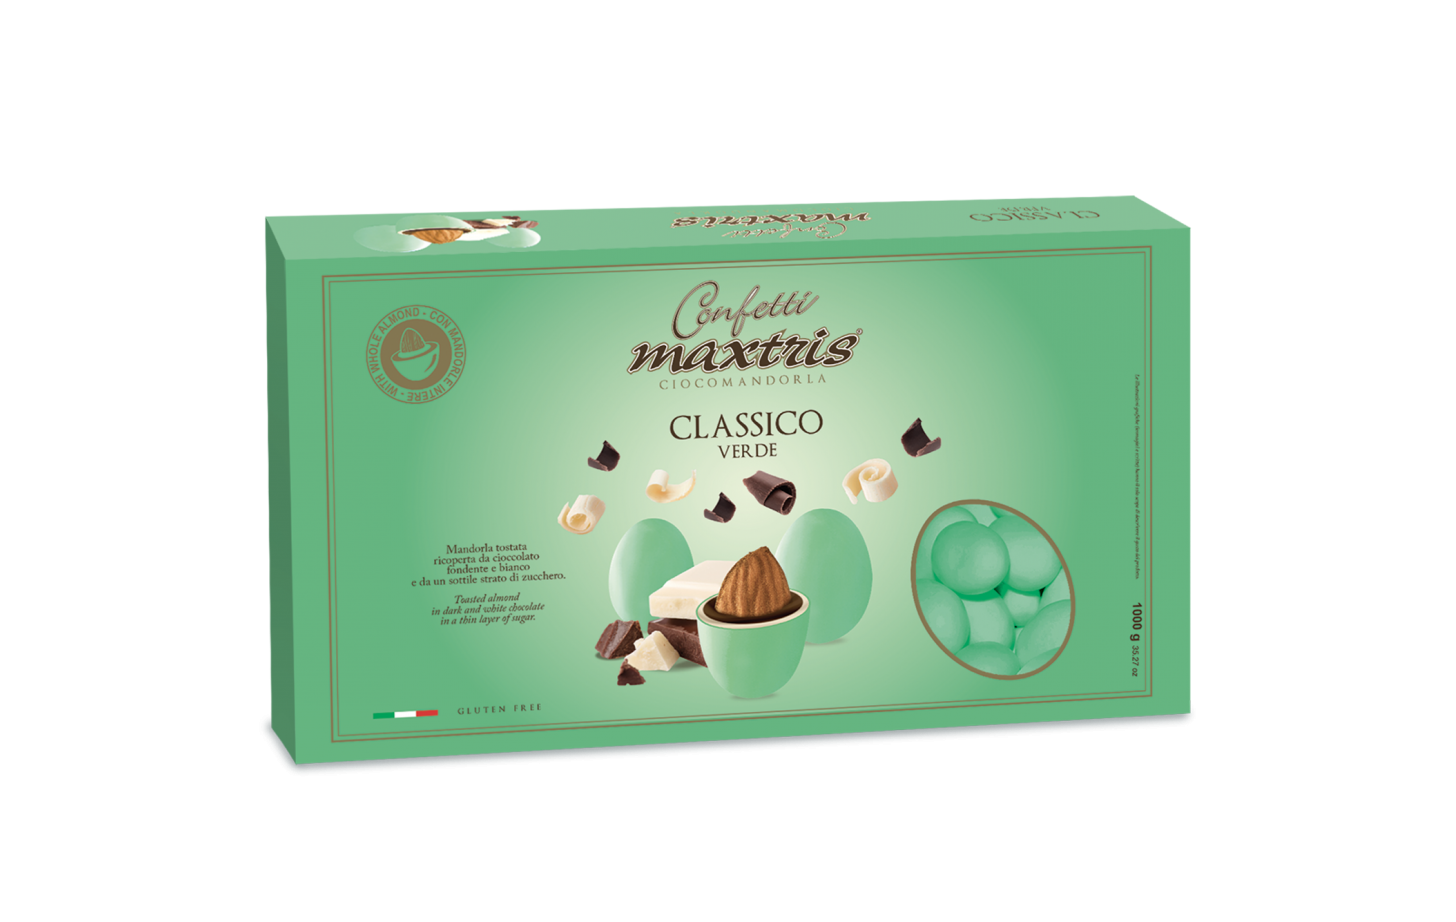 Confetti Maxtris cioccomandorla classici verde 1 kg Maxtris